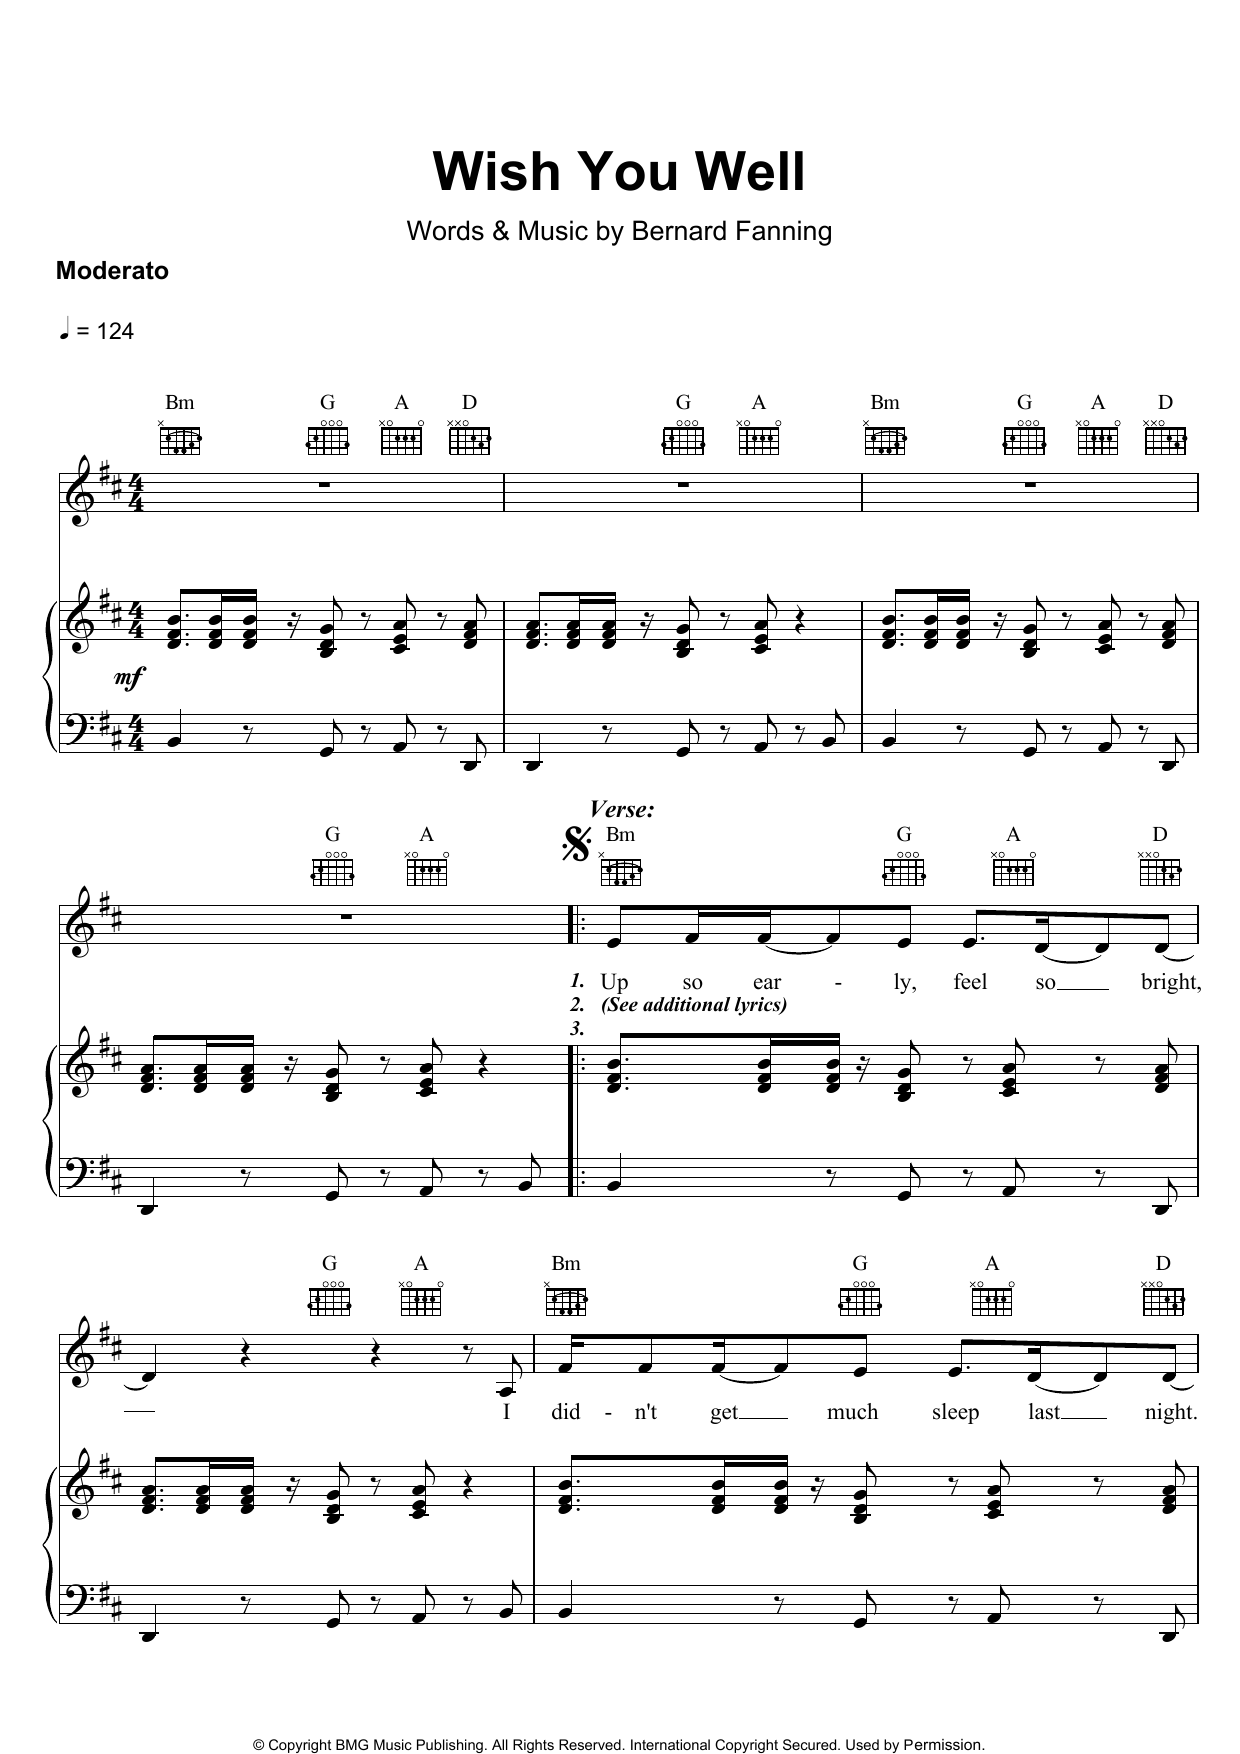 Bernard Fanning Wish You Well Sheet Music Notes & Chords for Ukulele - Download or Print PDF